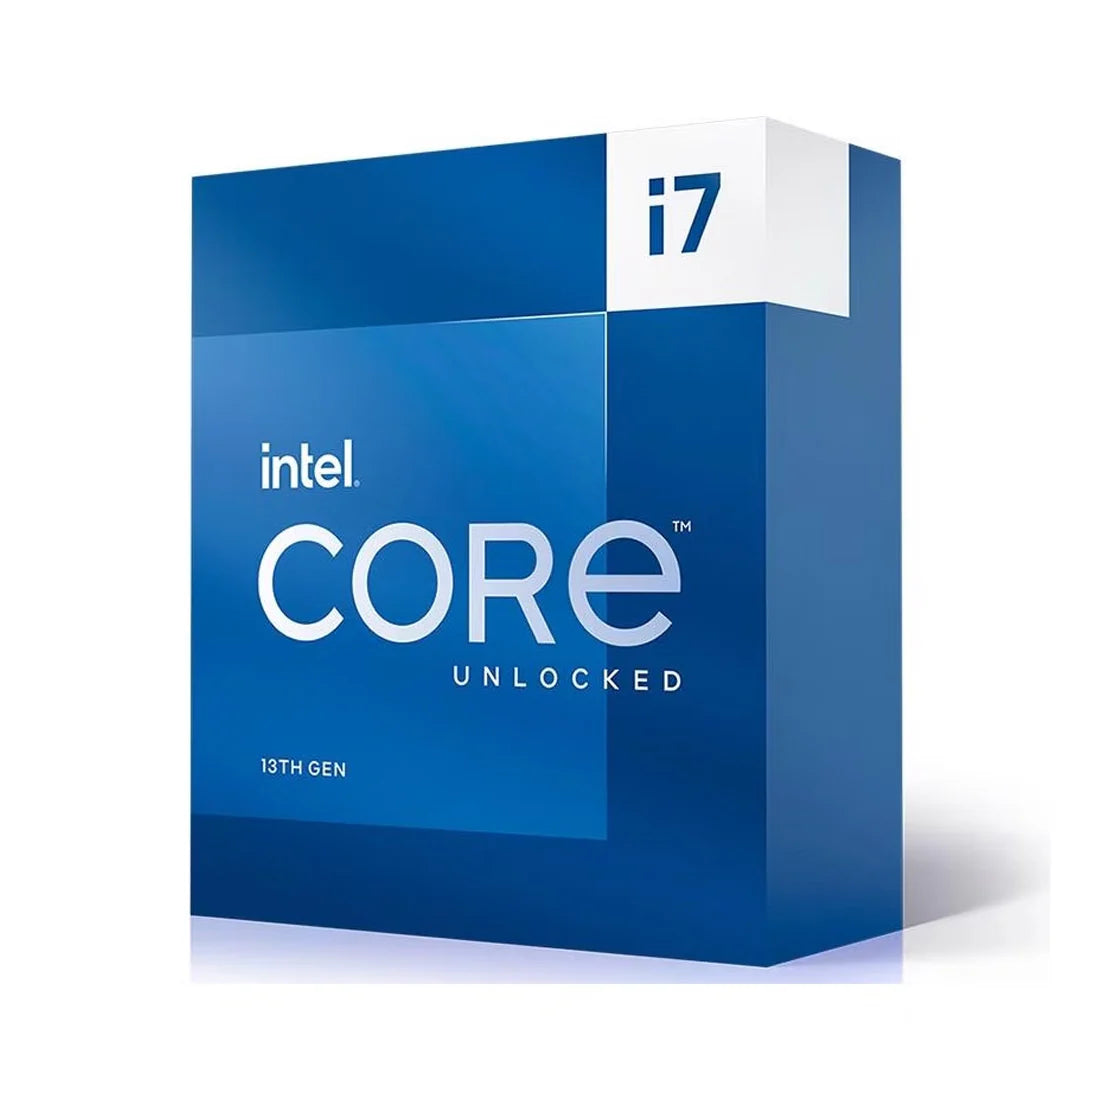 Intel Core i7-13700KF 10nm CPU with 16 Cores, 24 Threads, DDR5-5600 Max Memory, 100°C Peak Temp, Socket LGA-1700, No Integrated GPU